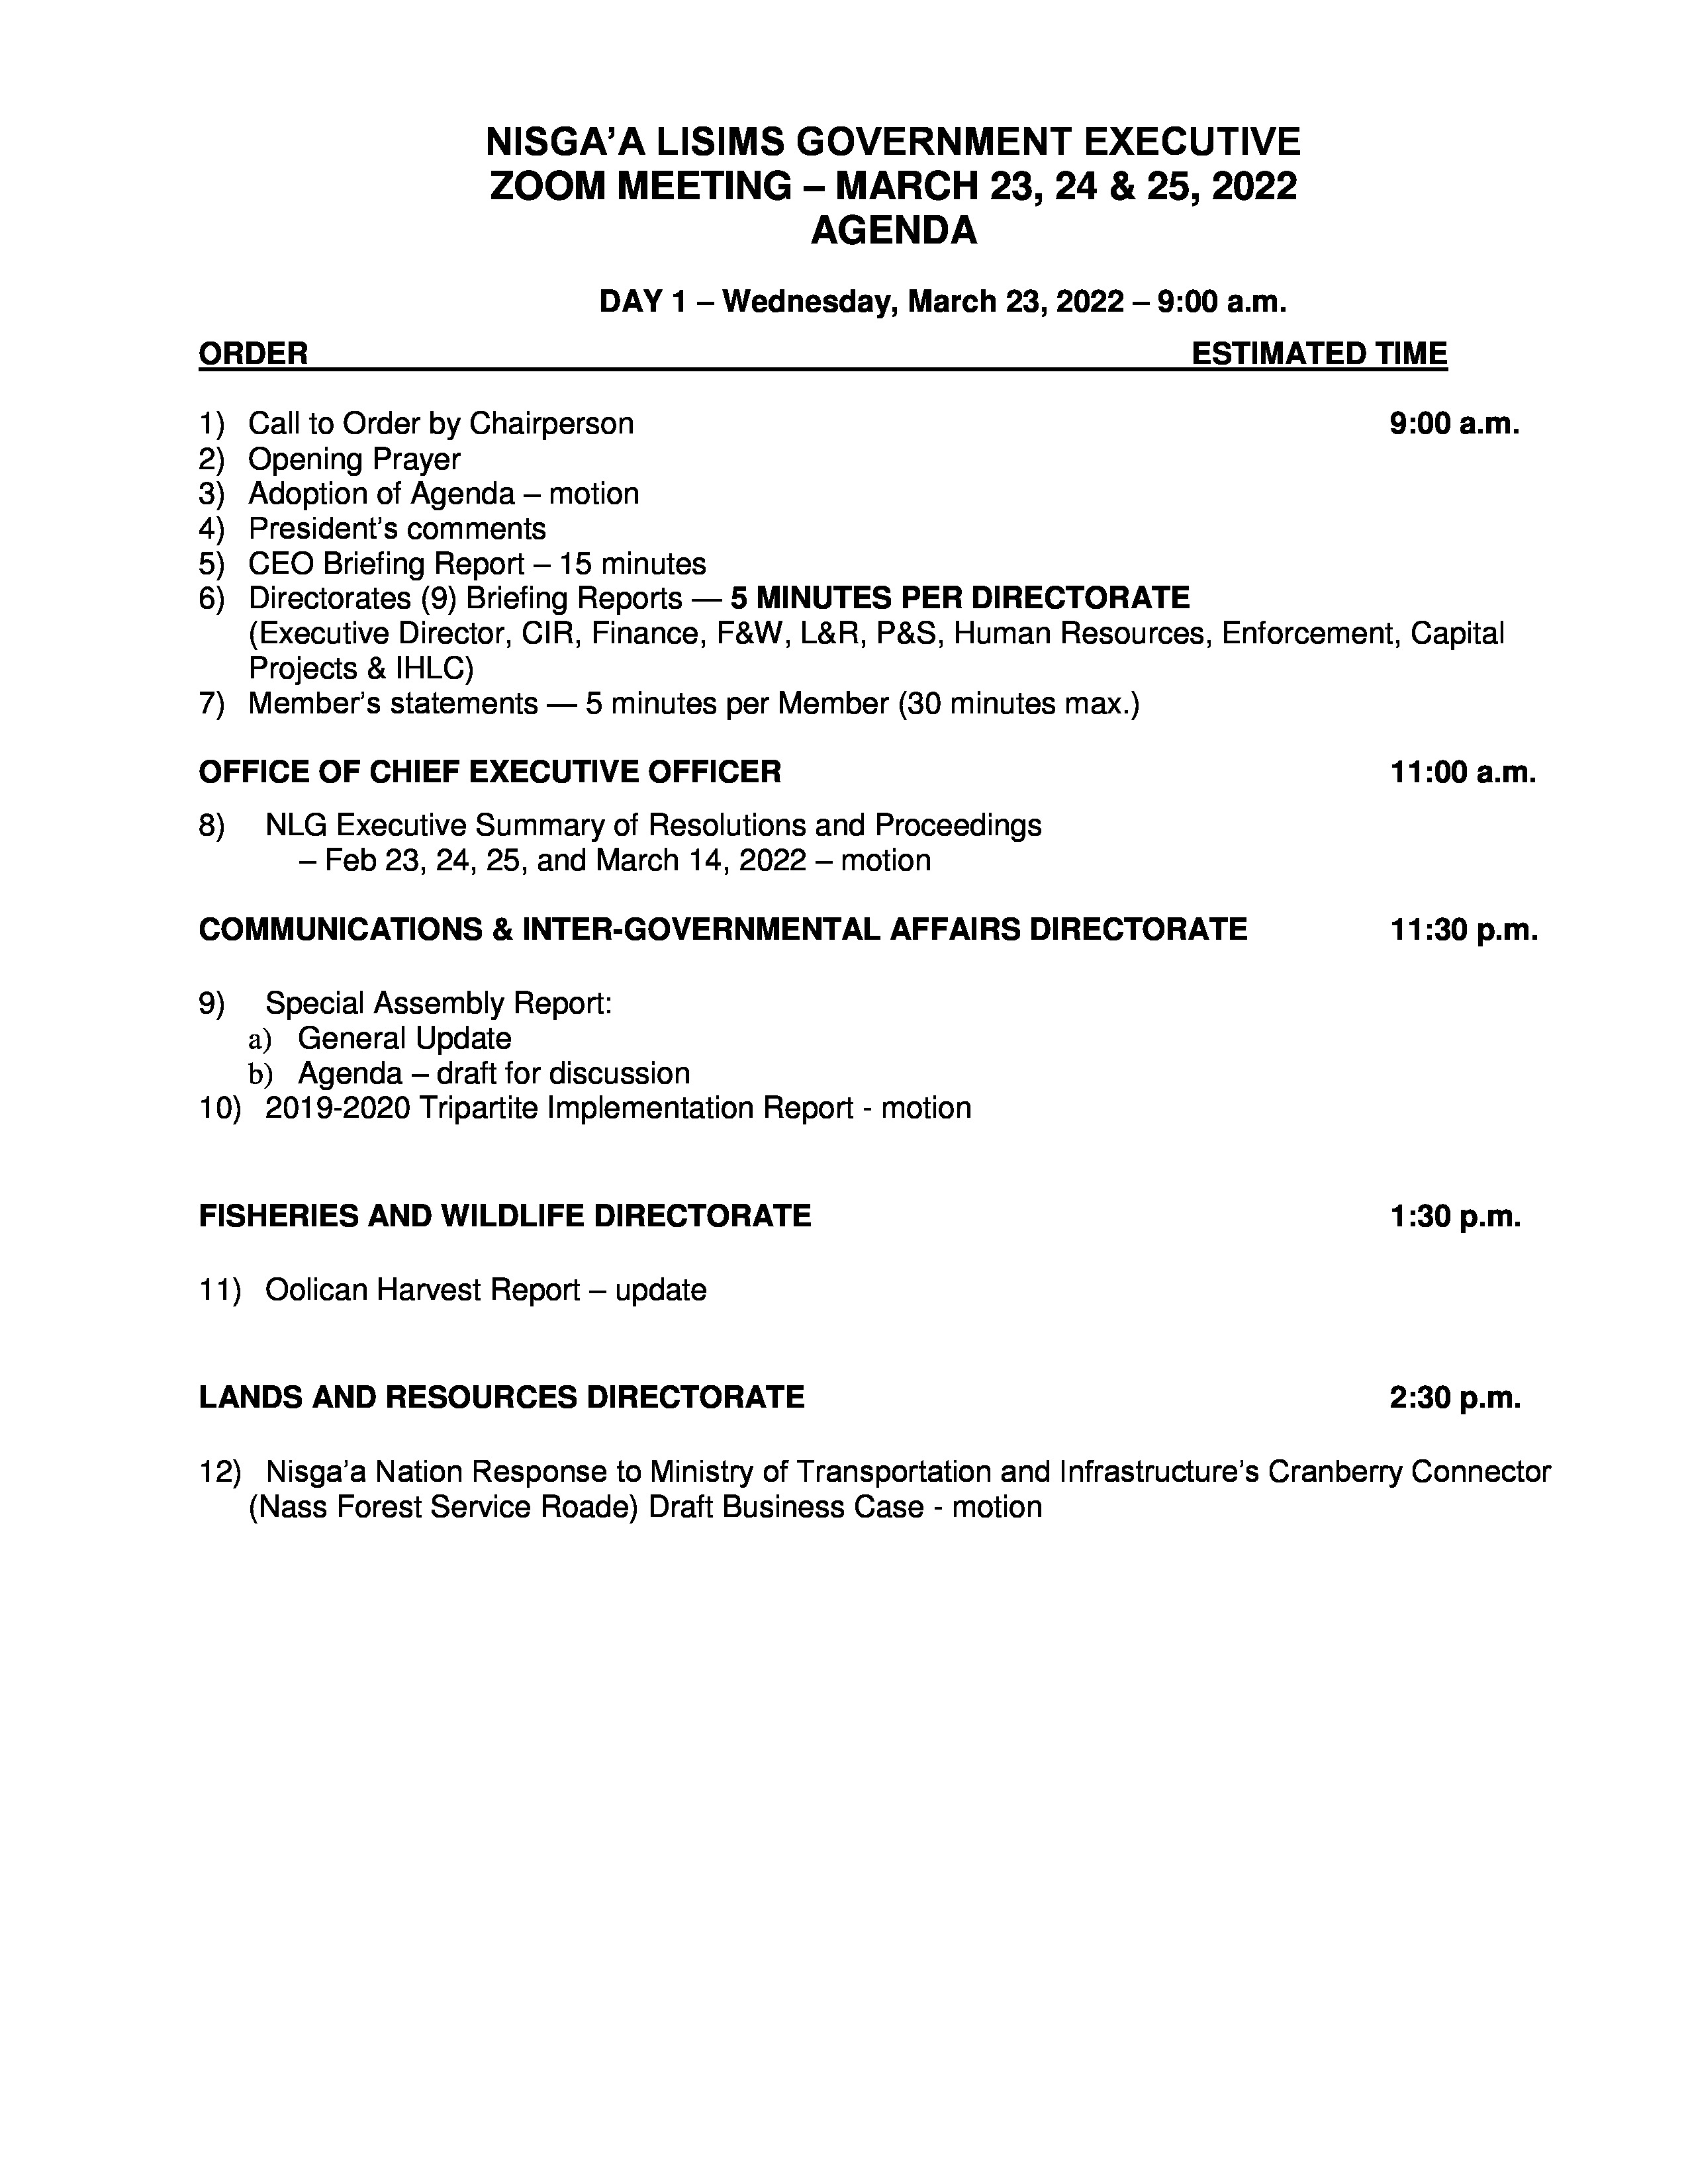 Agenda for Nisga'a Lisims Government Executive Meeting, Day1